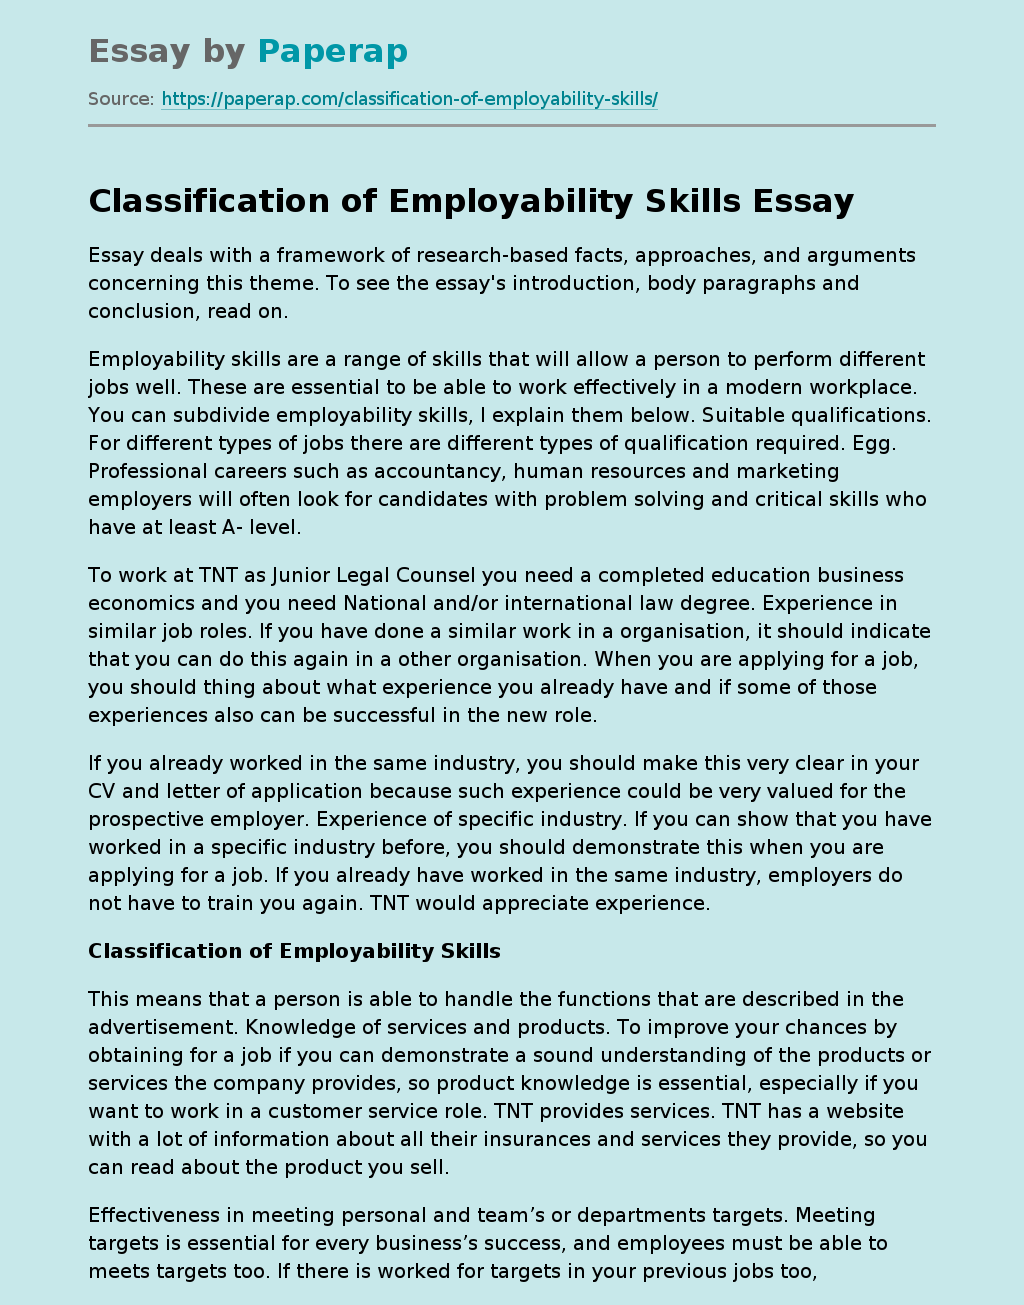 Classification of Employability Skills